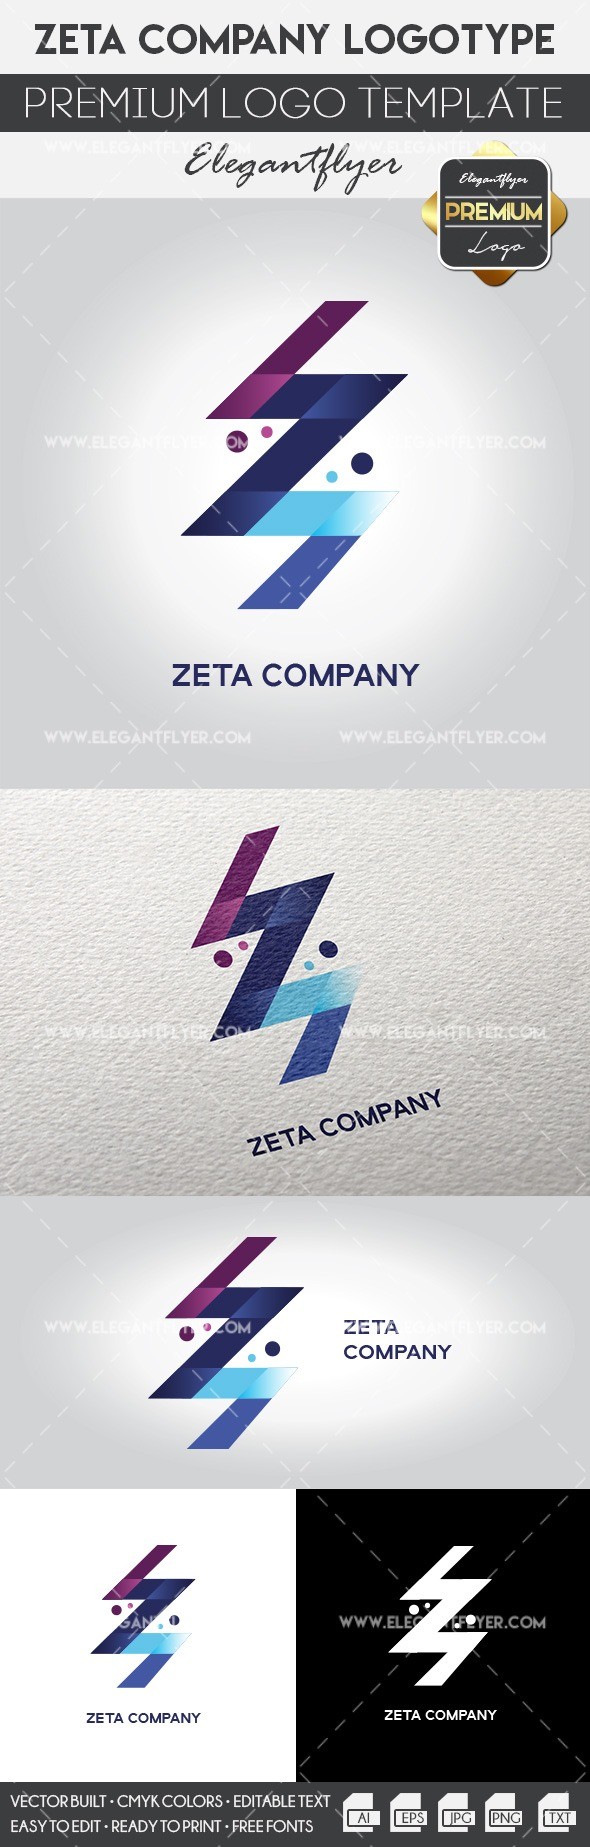 Empresa Zeta by ElegantFlyer